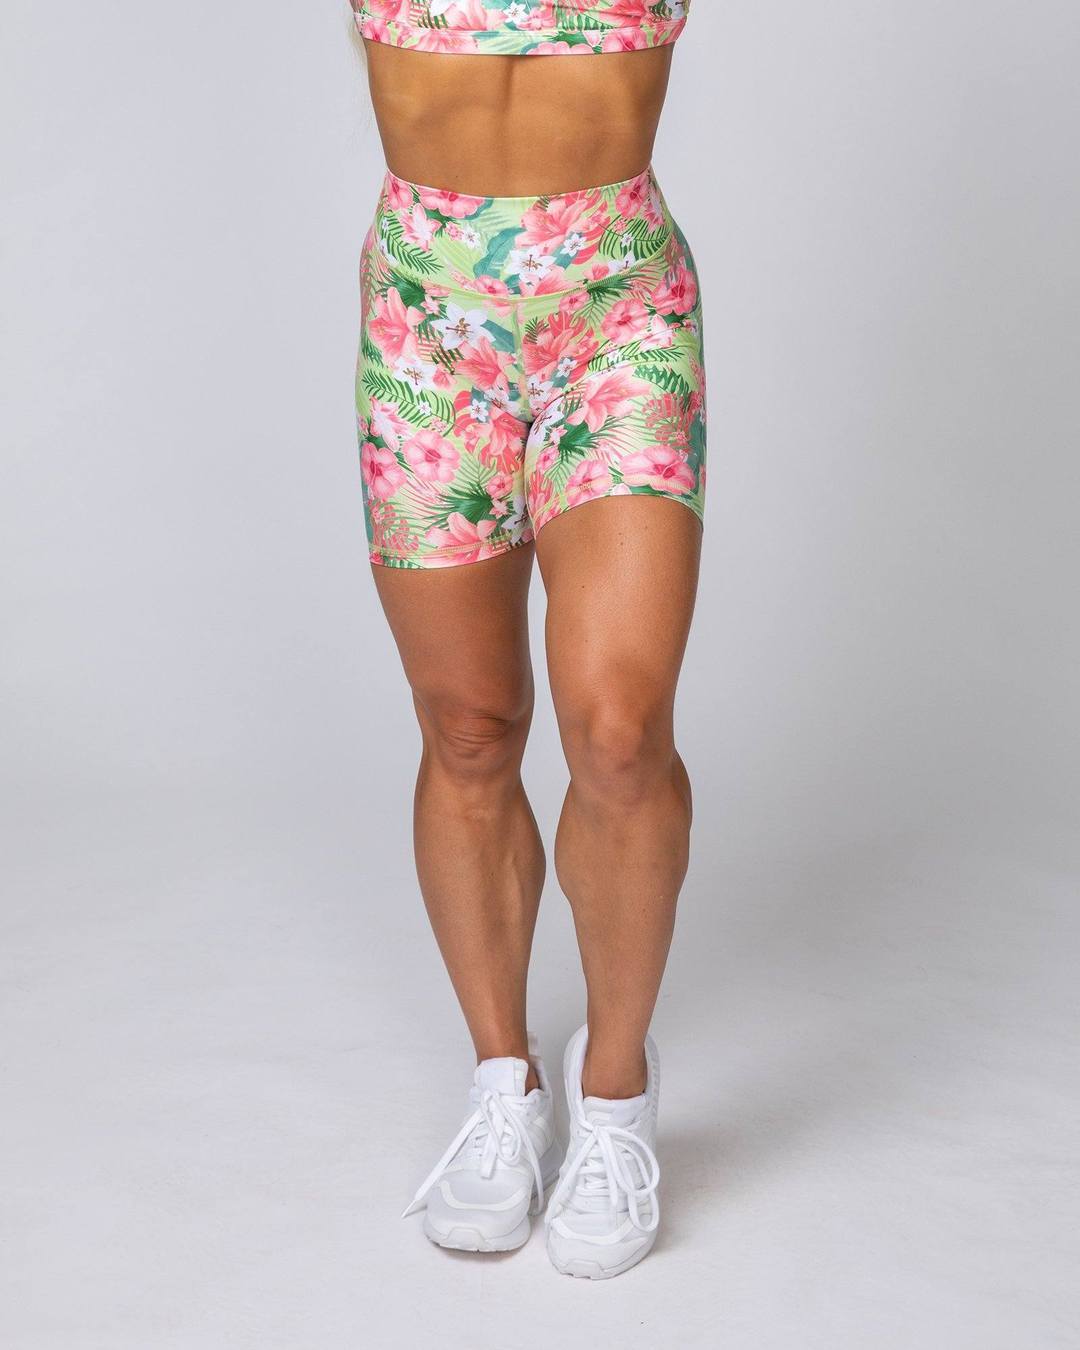 musclenation HBxMN Sweetheart Bike Shorts - Tropical Floral